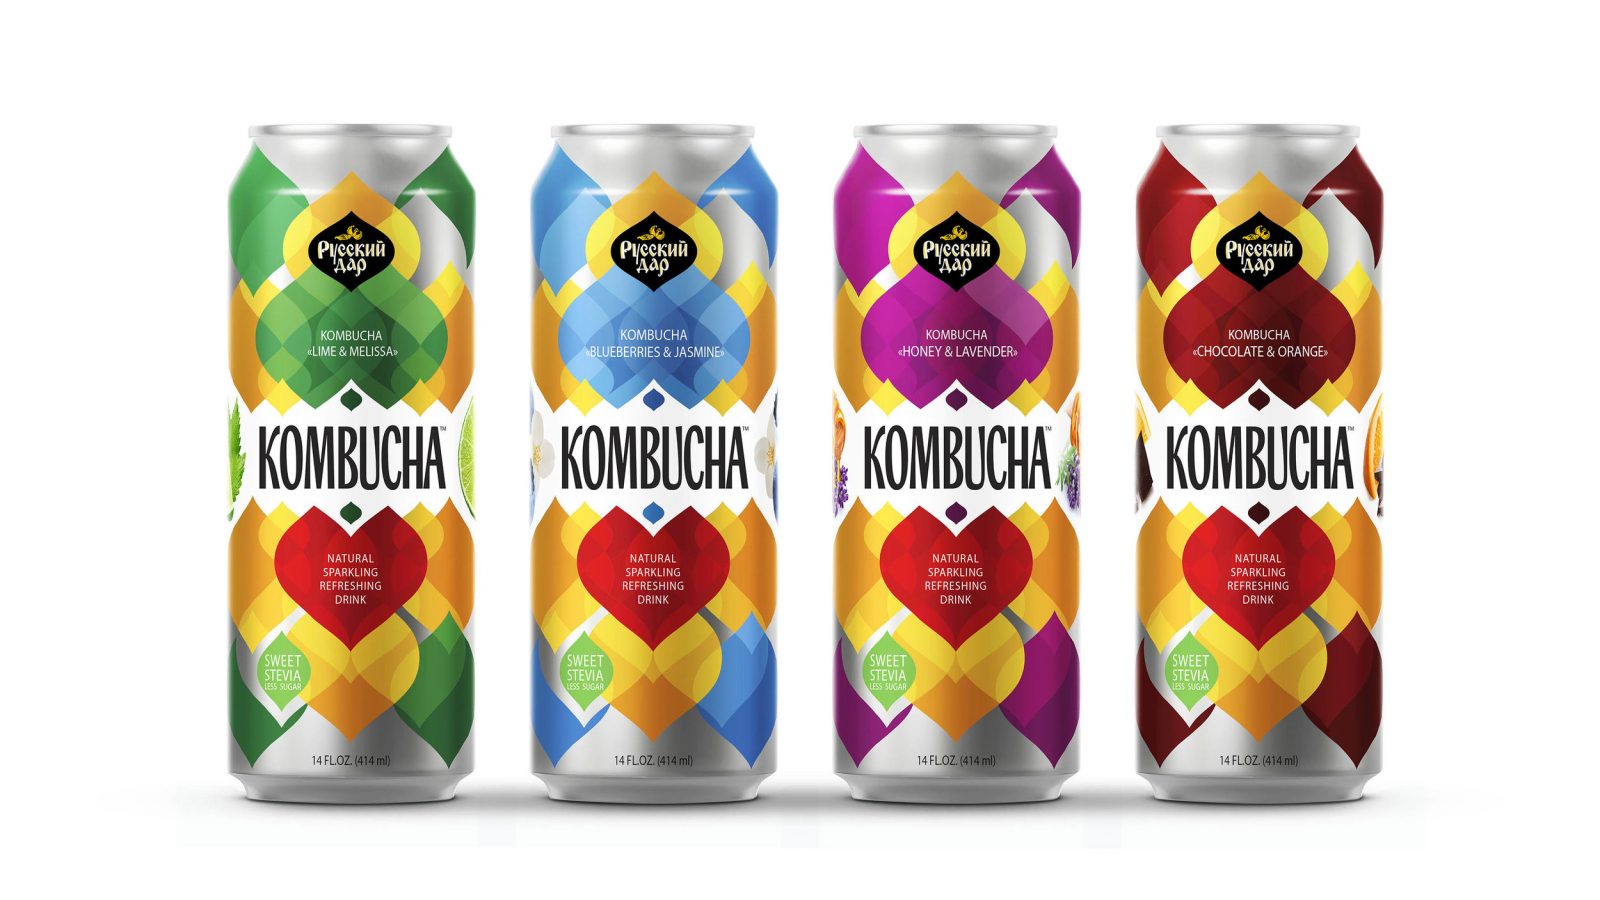 Kombucha Natural Sparkling Drink Packaging Design